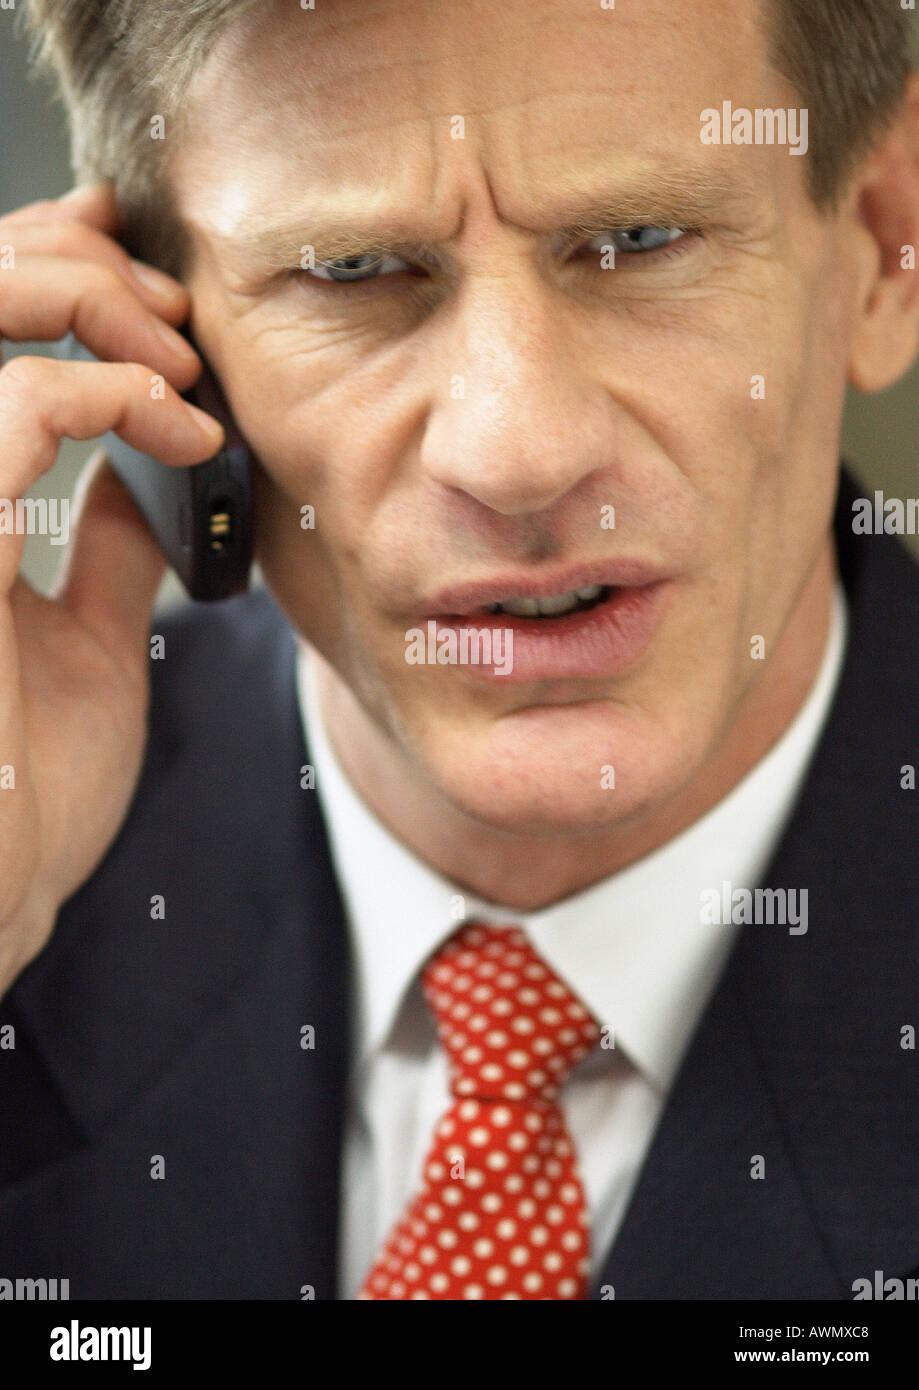 Businessman using cellular phone, close-up portrait. Stock Photo